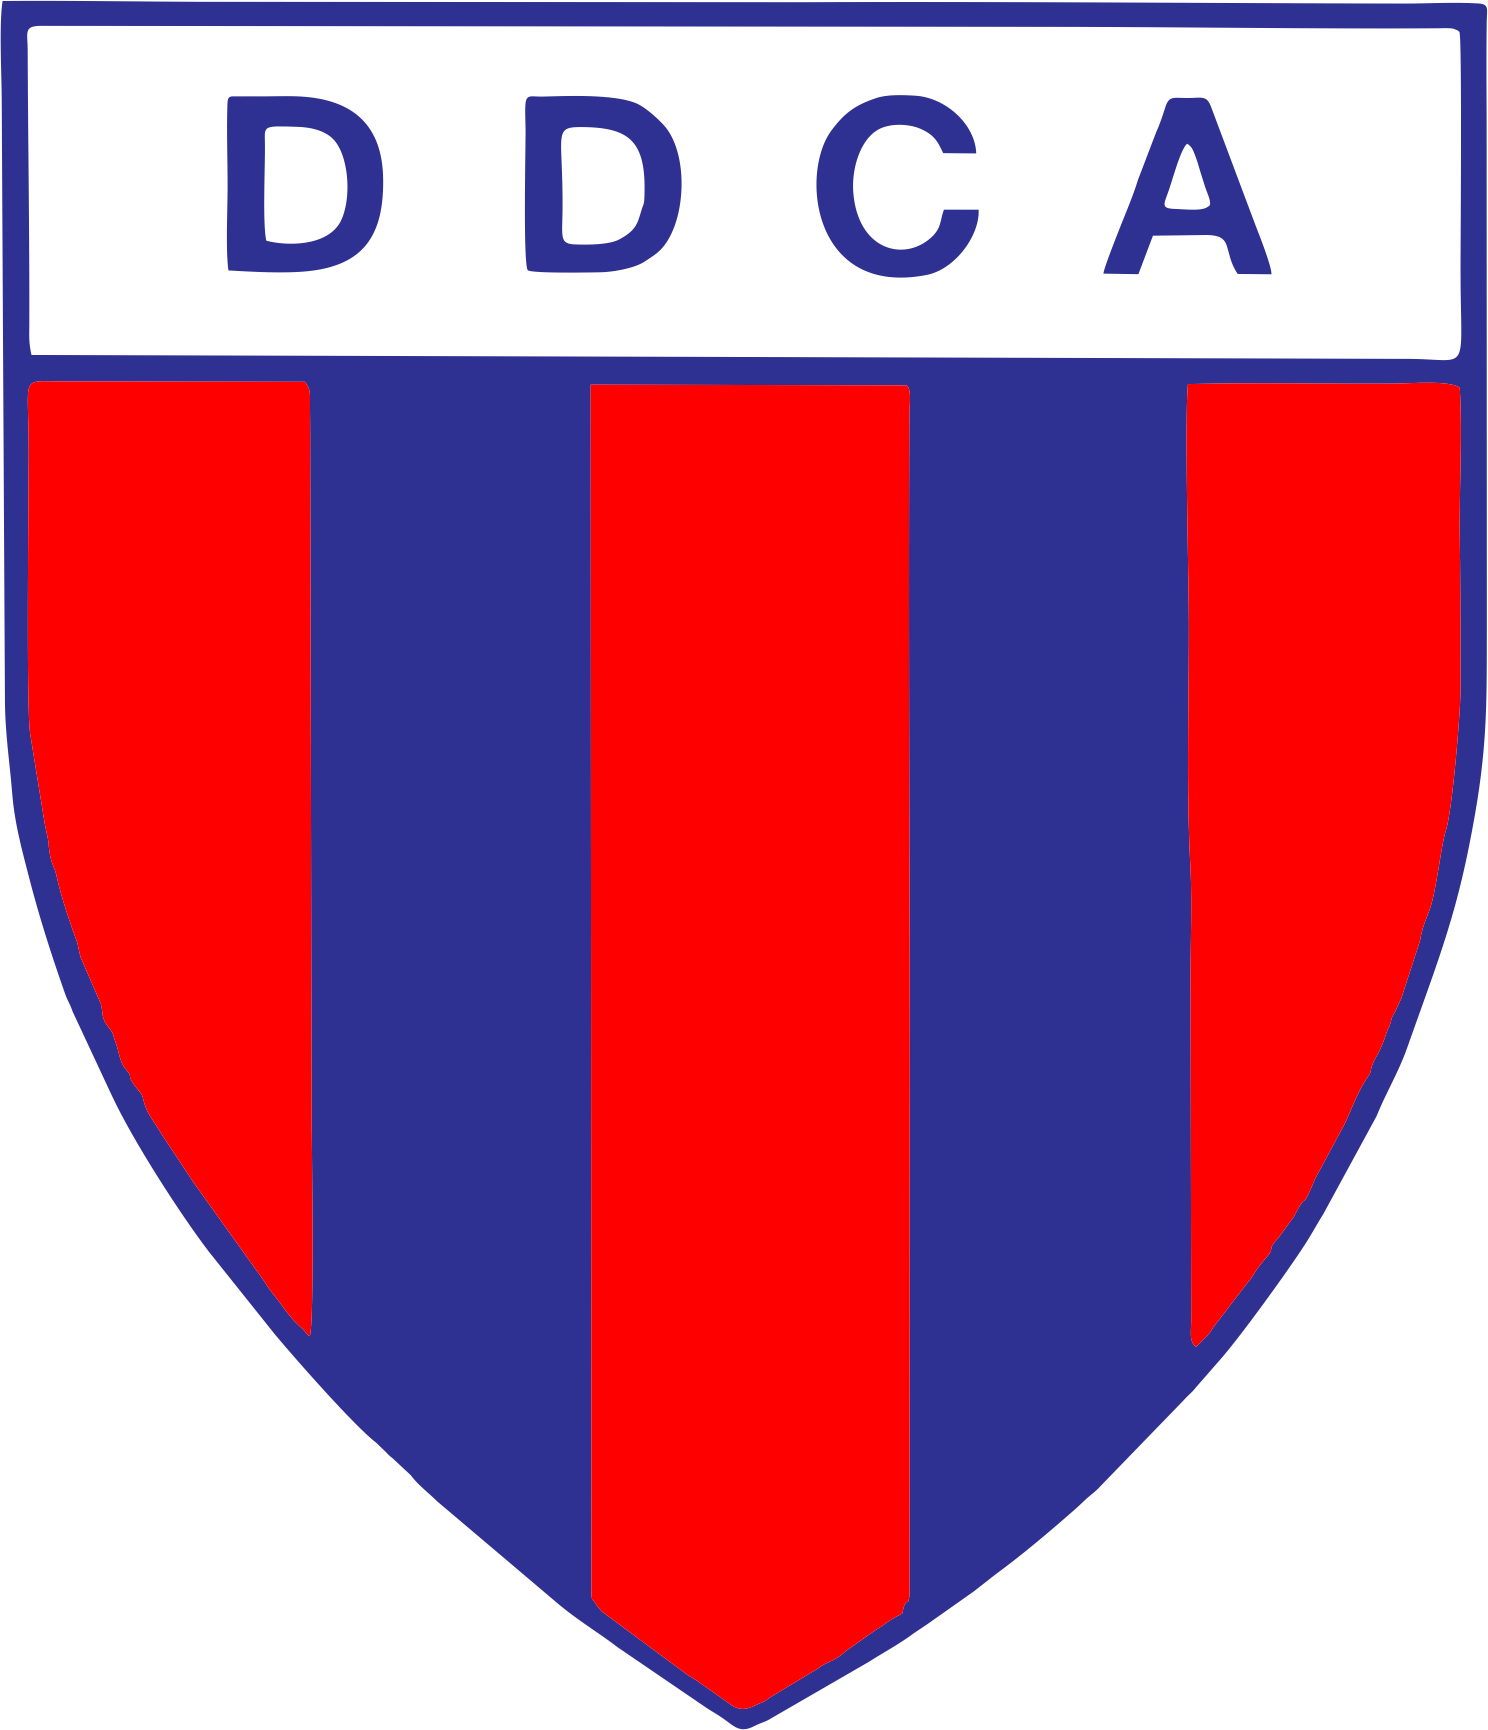 DDCA Logo